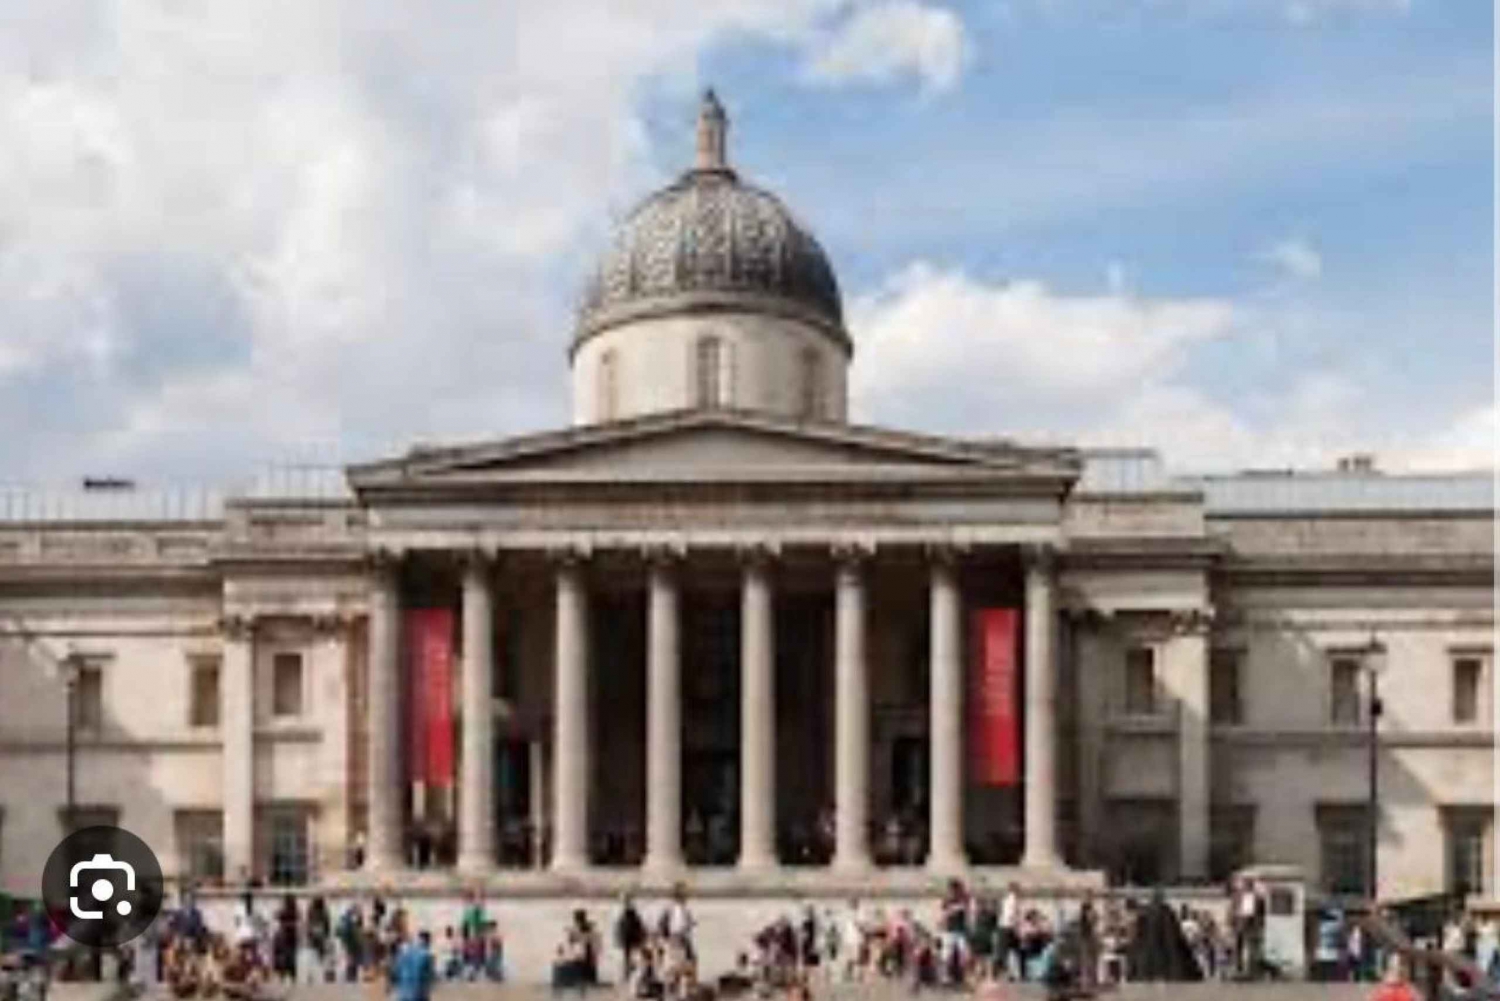 London gallery Guide